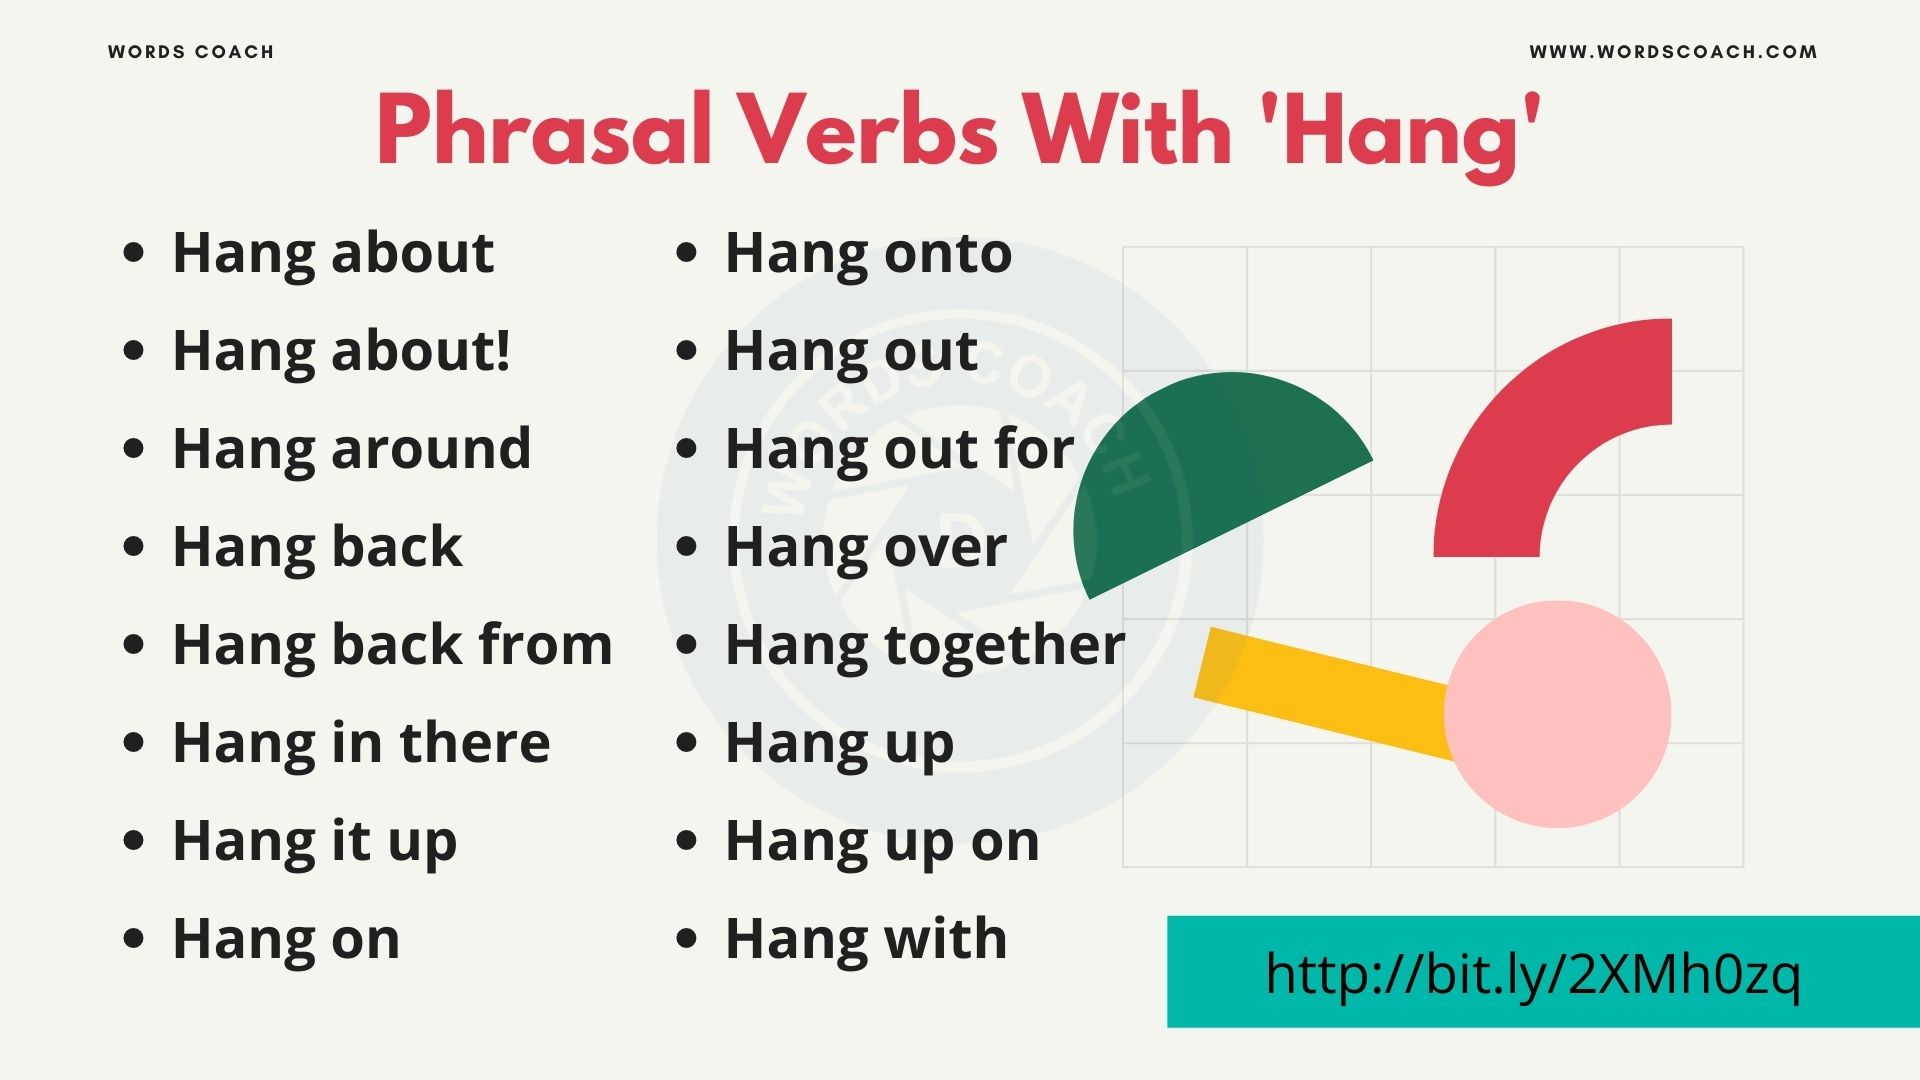 Hang back. Phrasal verbs with hang.